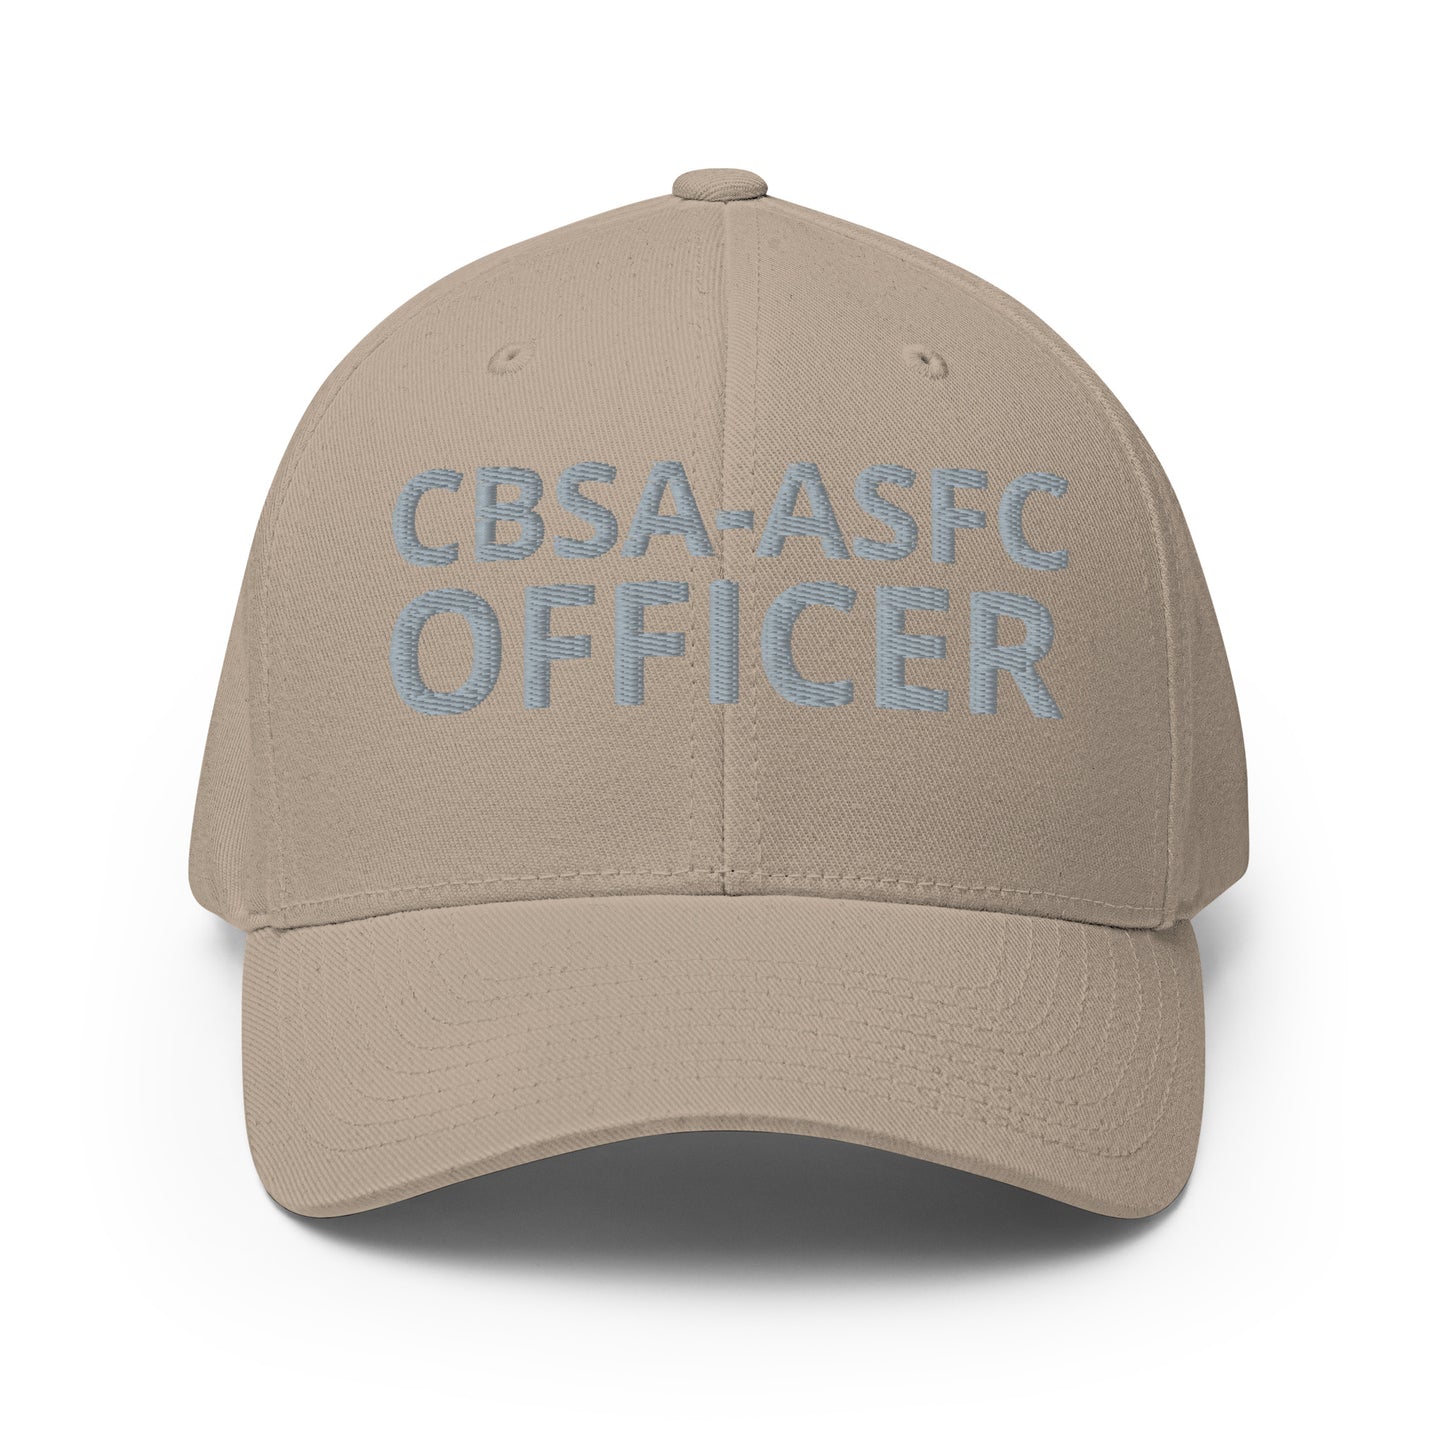 CBSA Officer Subdued Duty Flextfit Ballcap